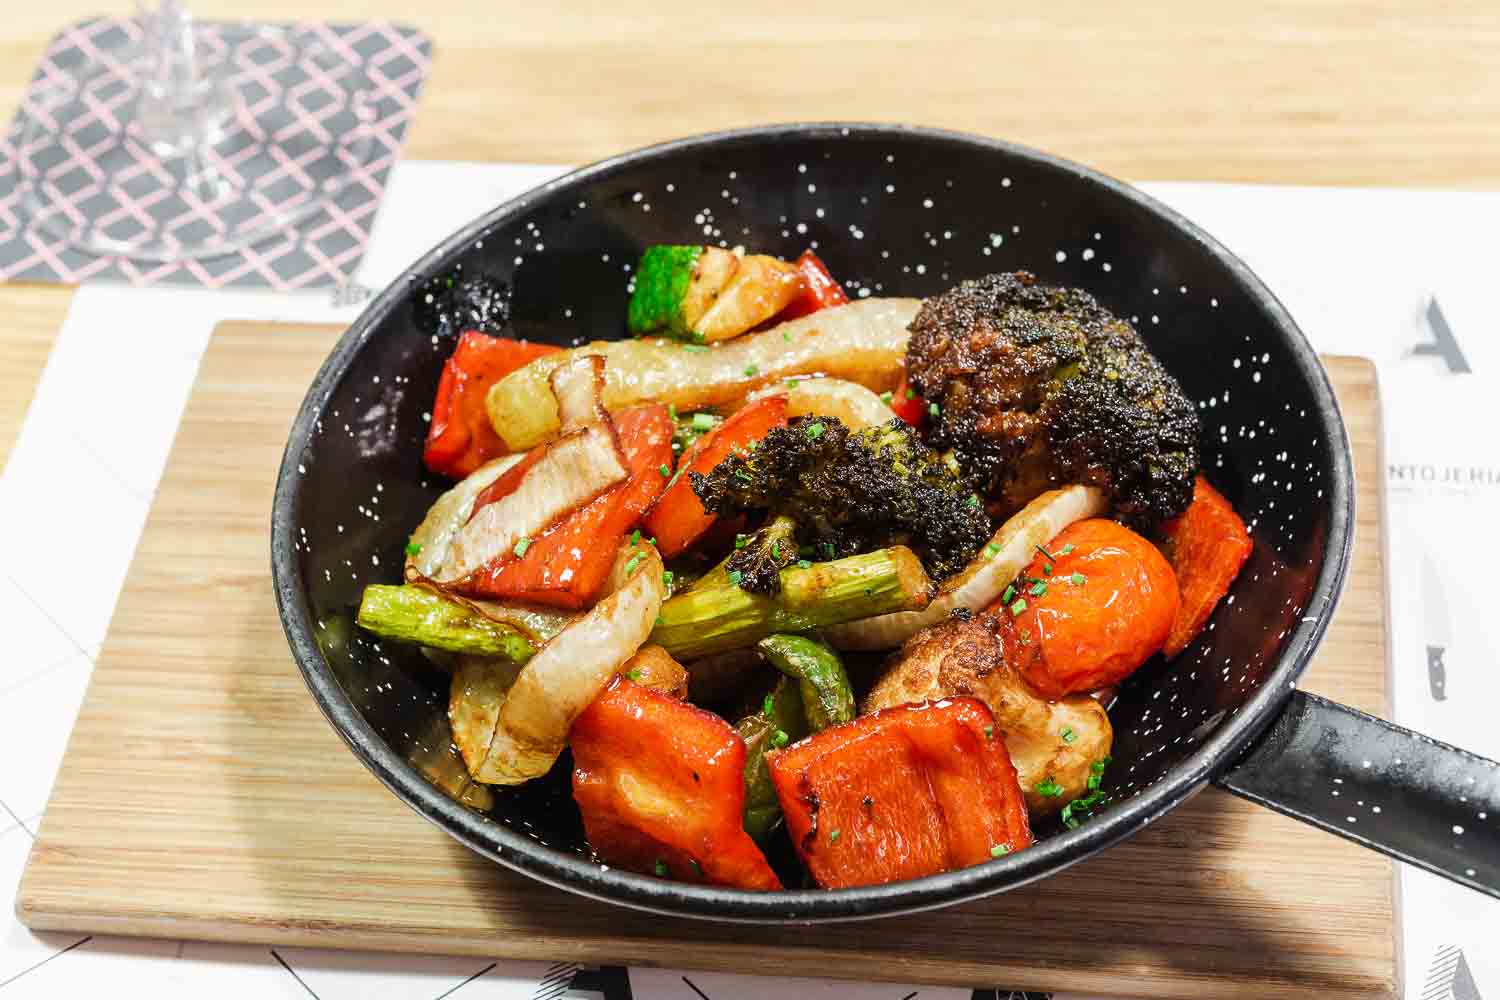 Stir-fried wok vegetables